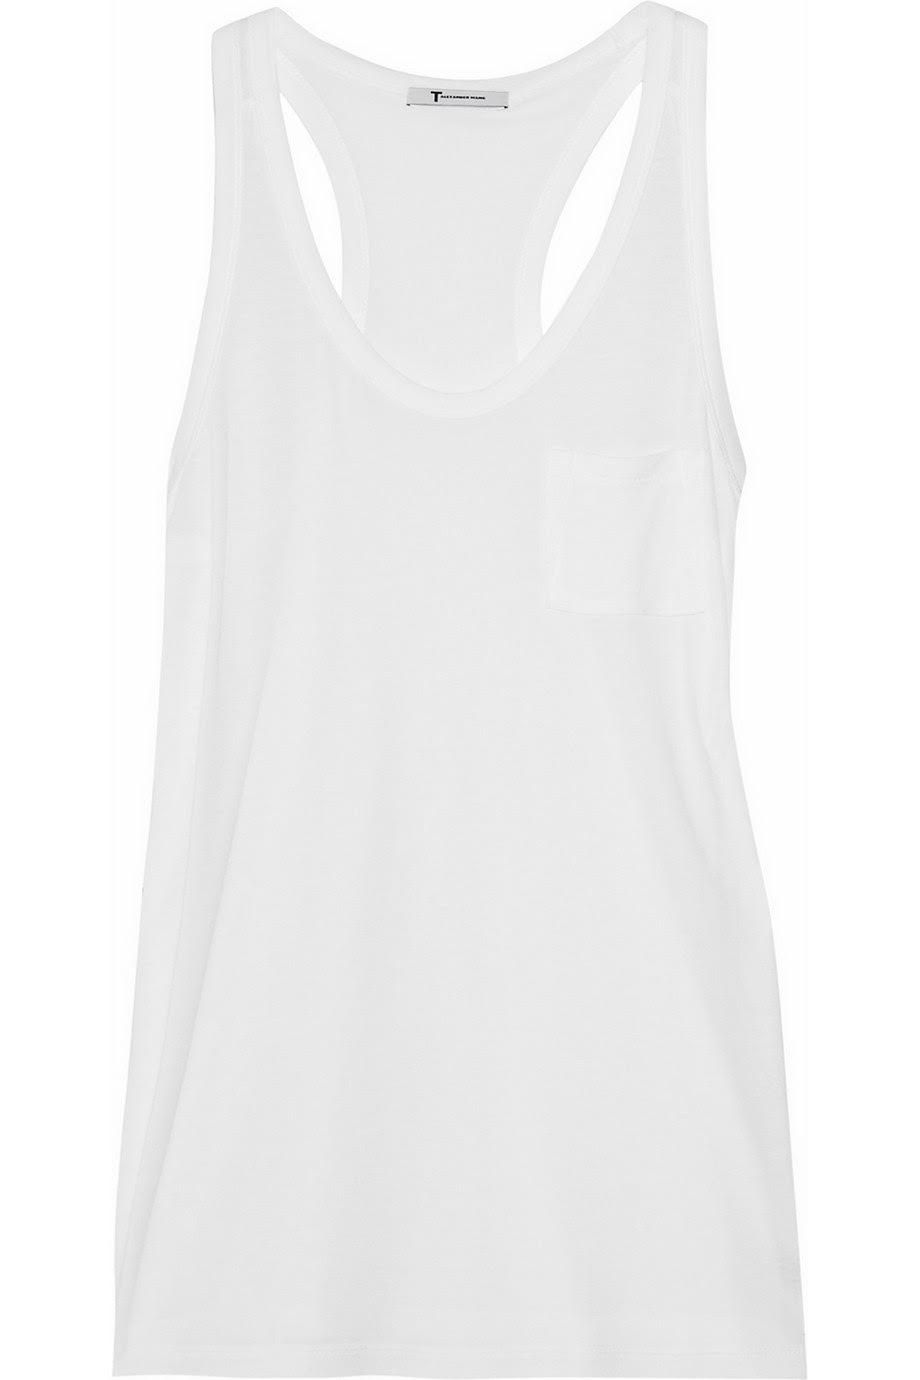 Product, White, Sleeveless shirt, Pattern, Grey, Day dress, One-piece garment, Fashion design, Active shirt, Active tank, 